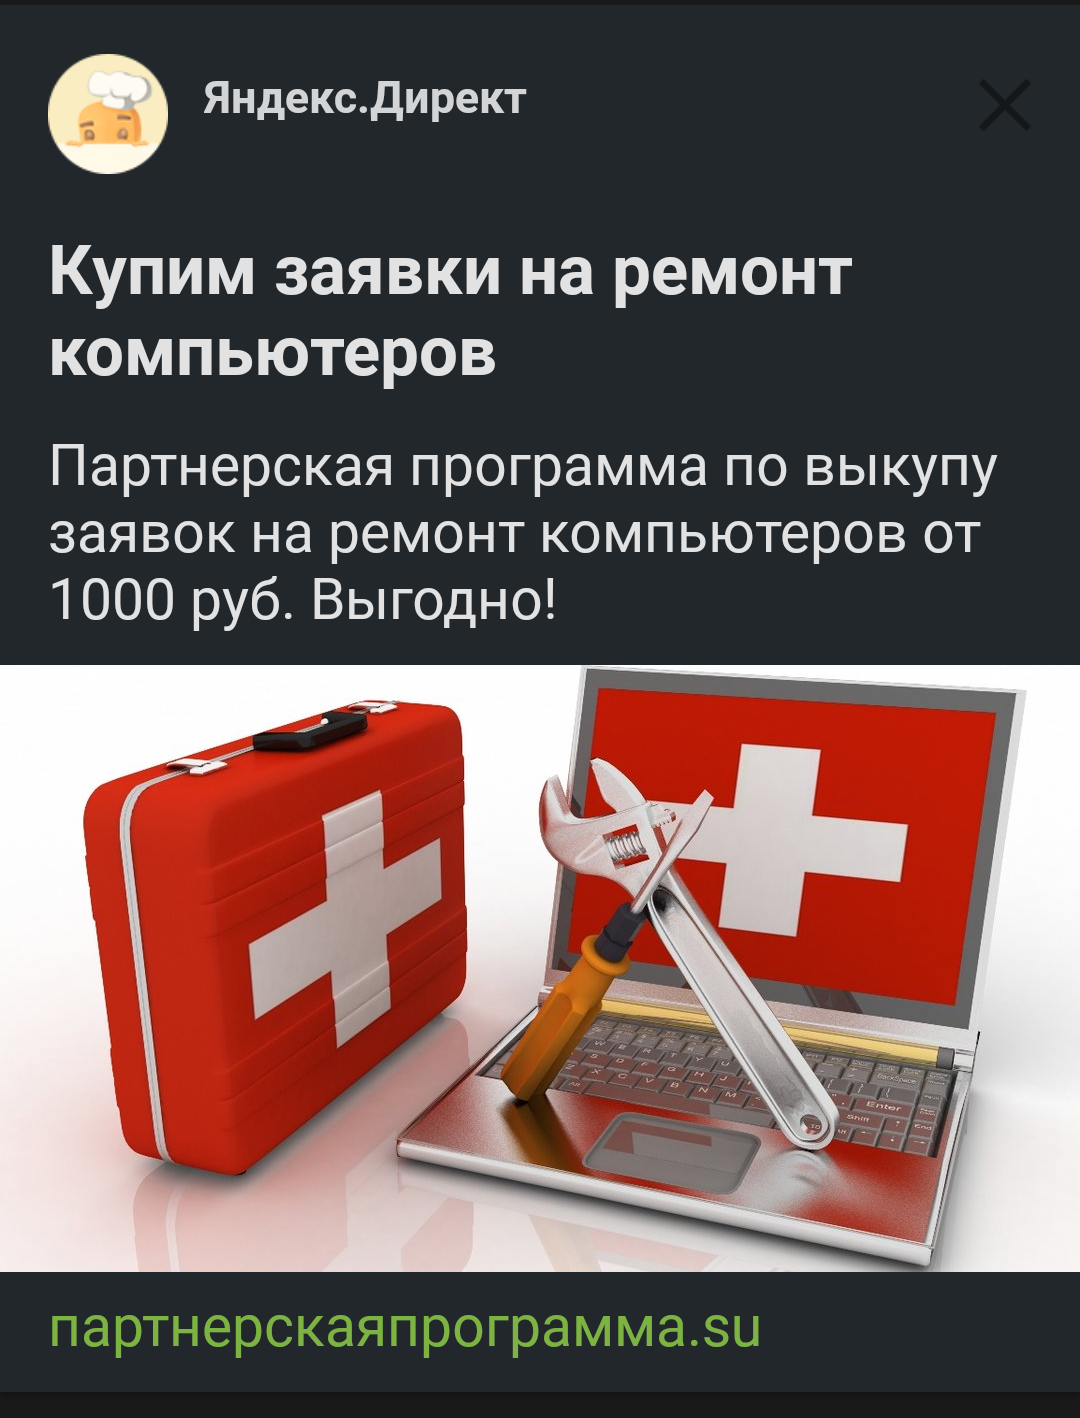 Computer tricks in Yandex advertising - Yandex Direct, Rsya, Fraud